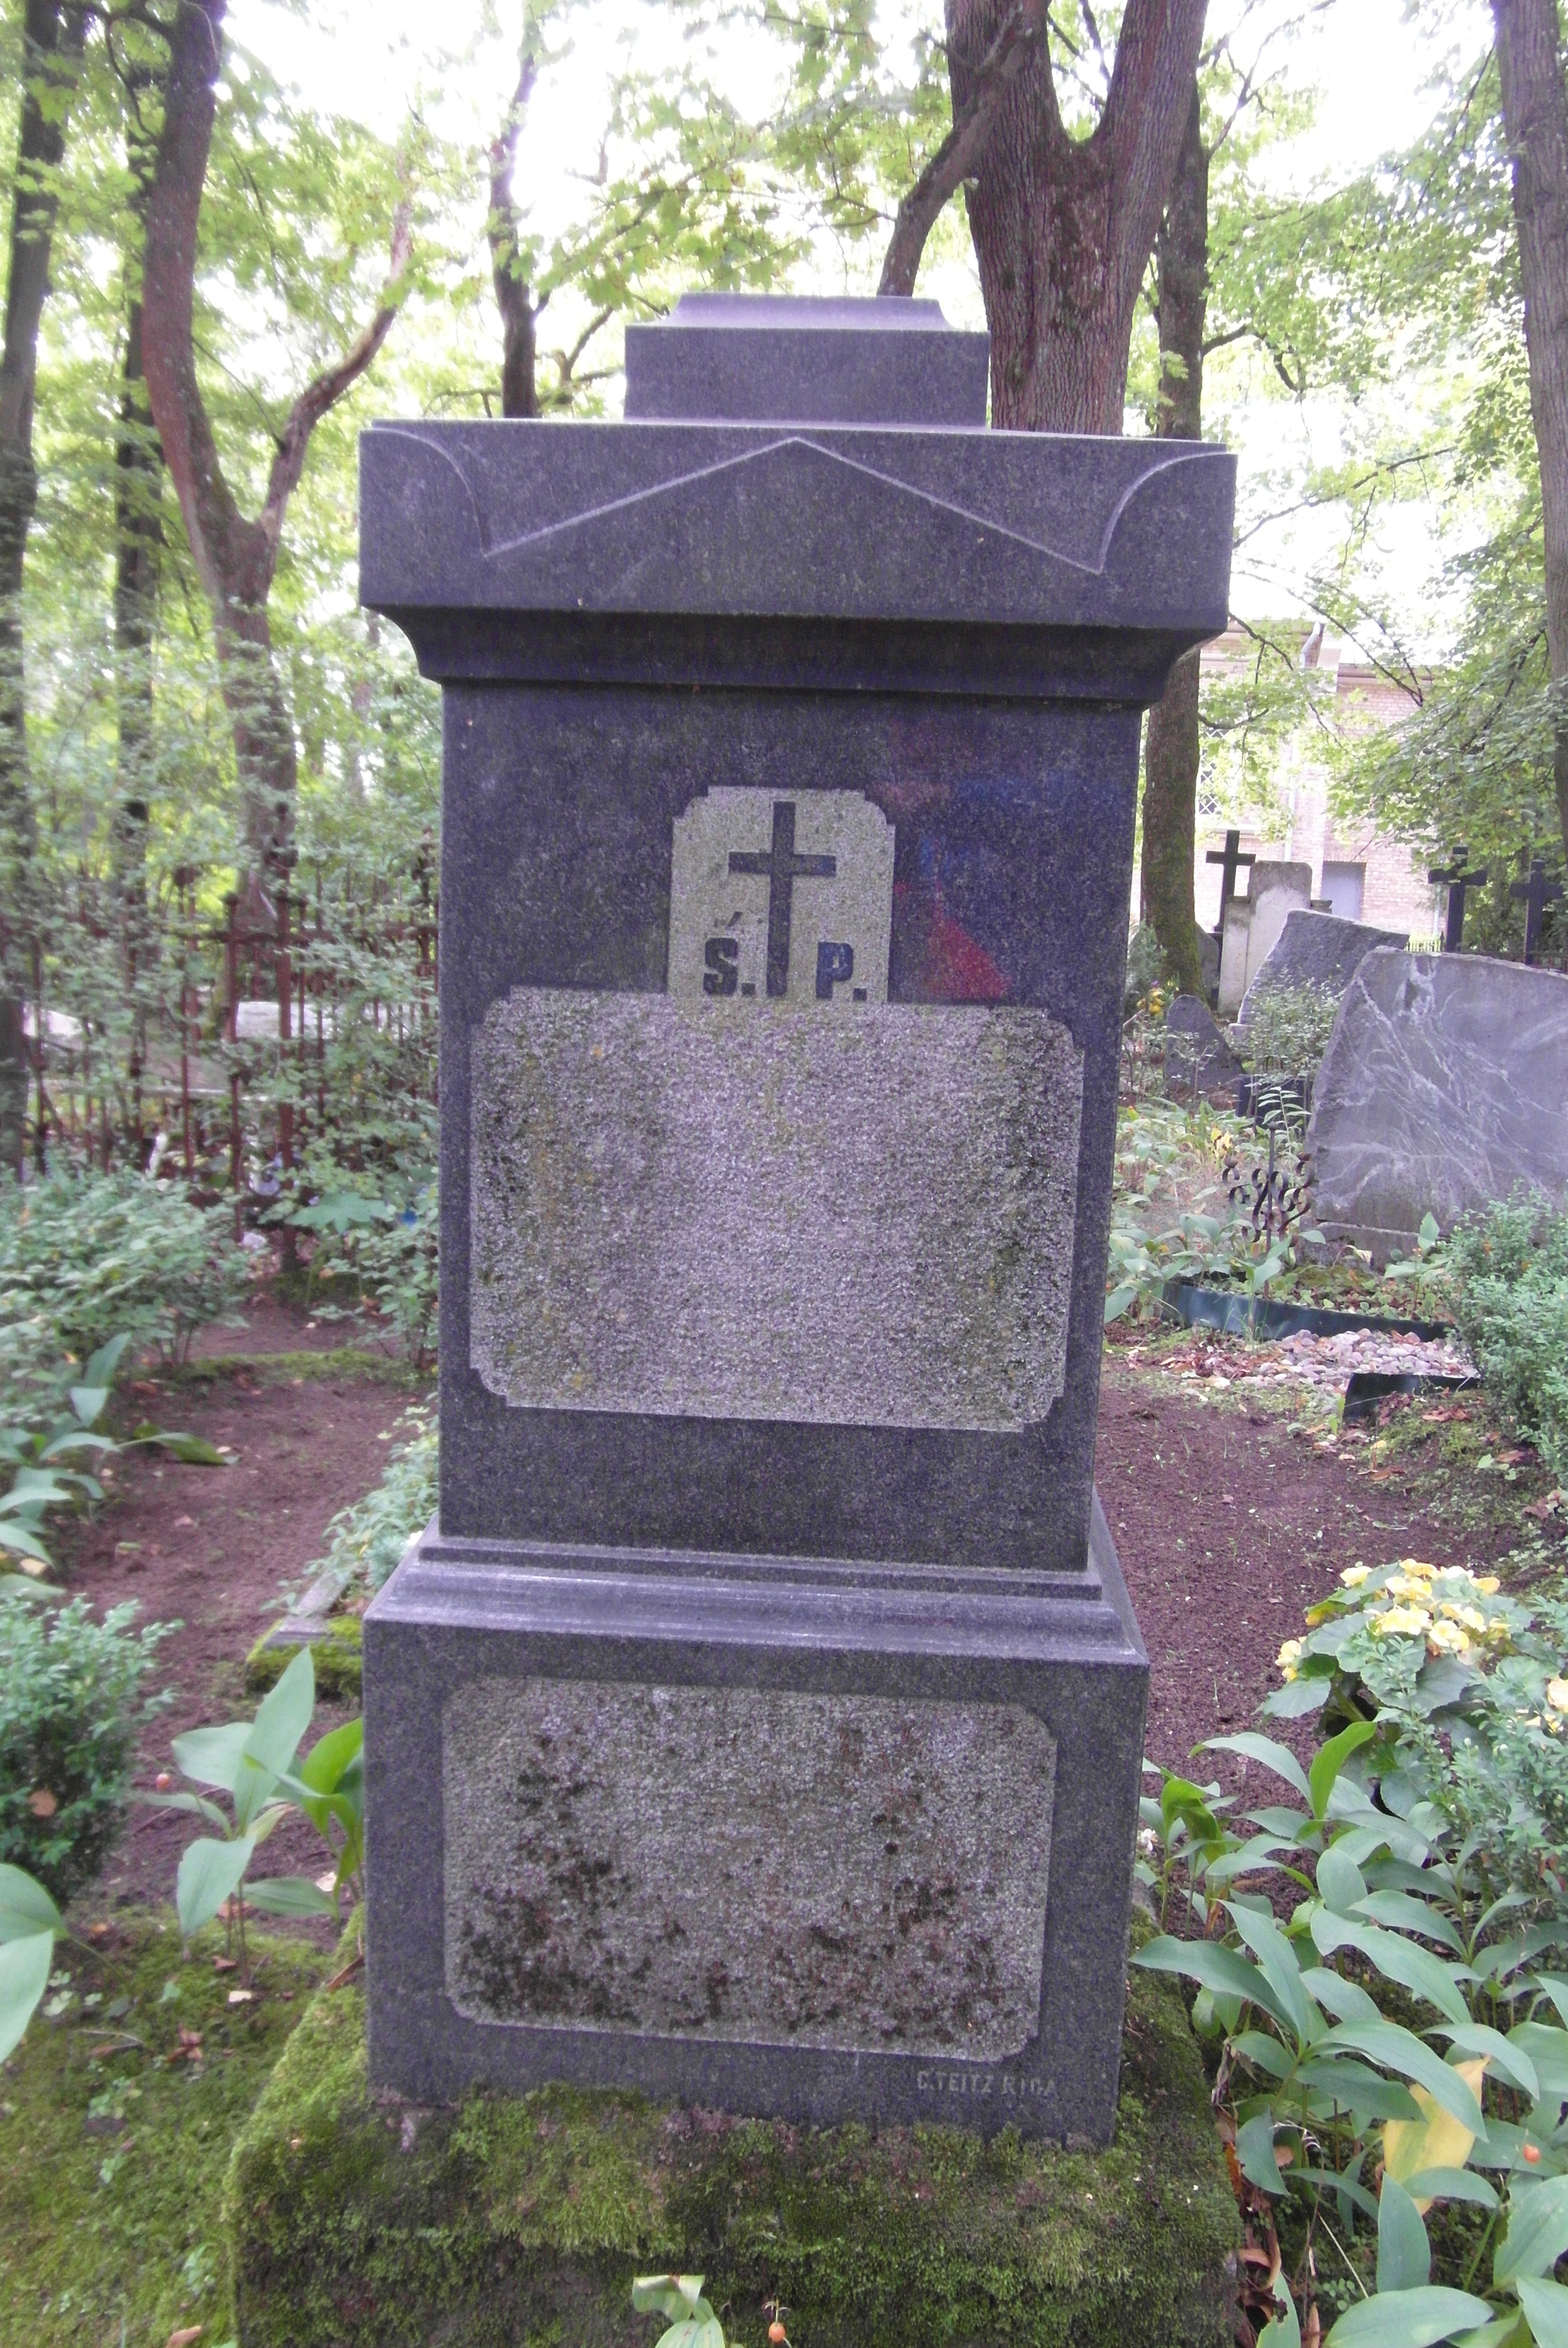 Tombstone of Wanda Deiko, St Michael's cemetery in Riga, as of 2021.